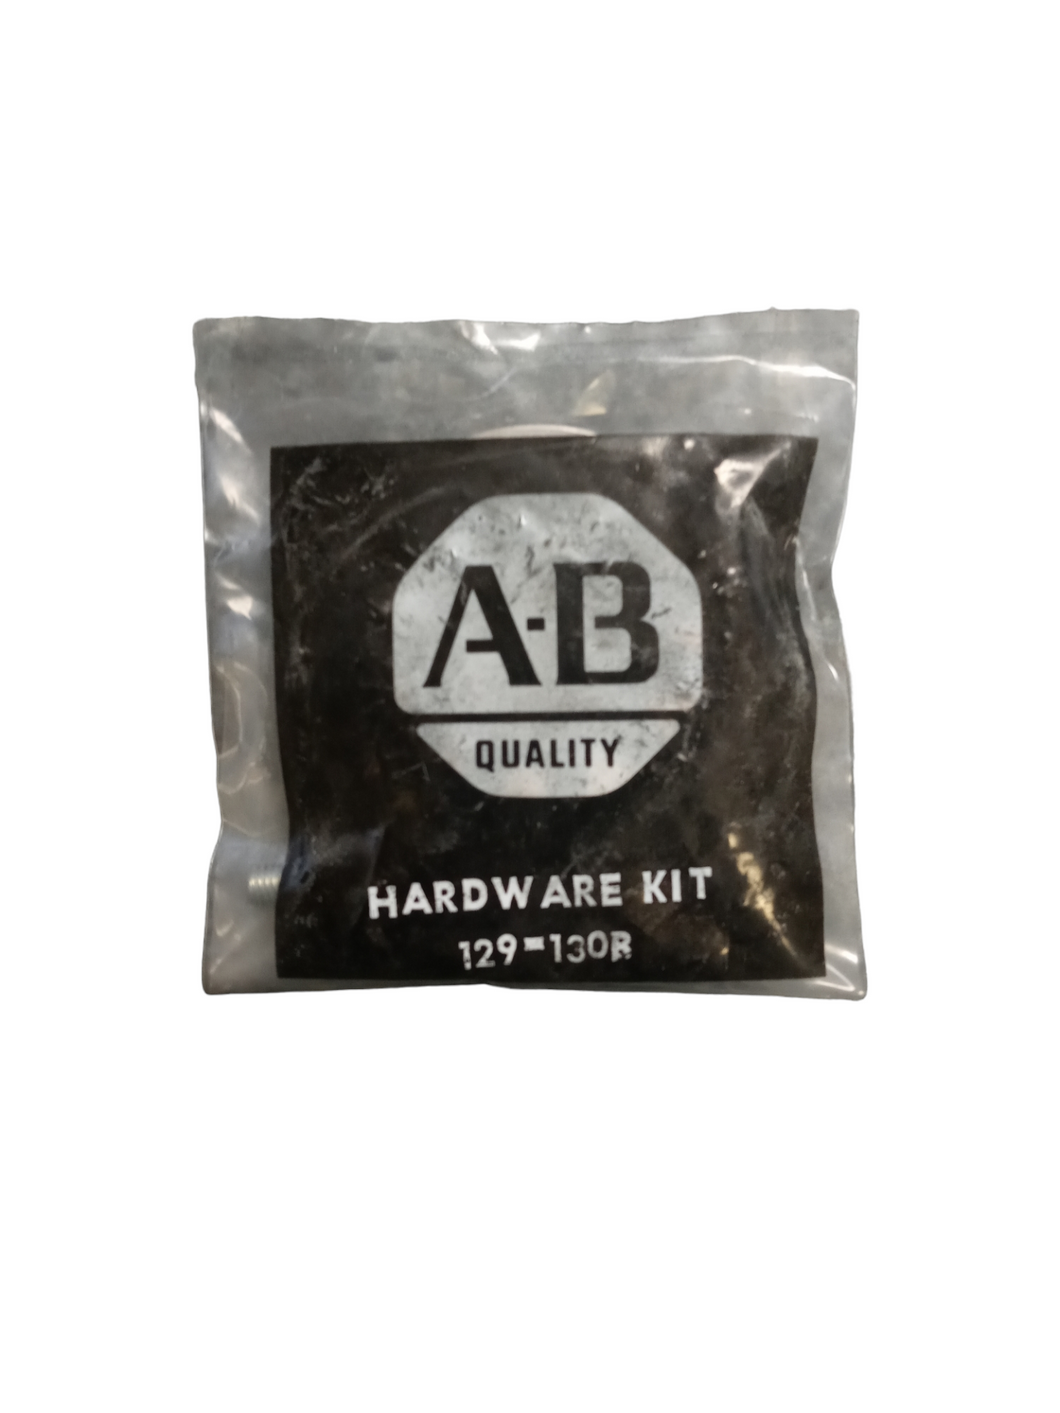 Allen Bradley, 129-130 R, Hardware Kit - NEW IN ORIGINAL PACKAGING - FreemanLiquidators - [product_description]